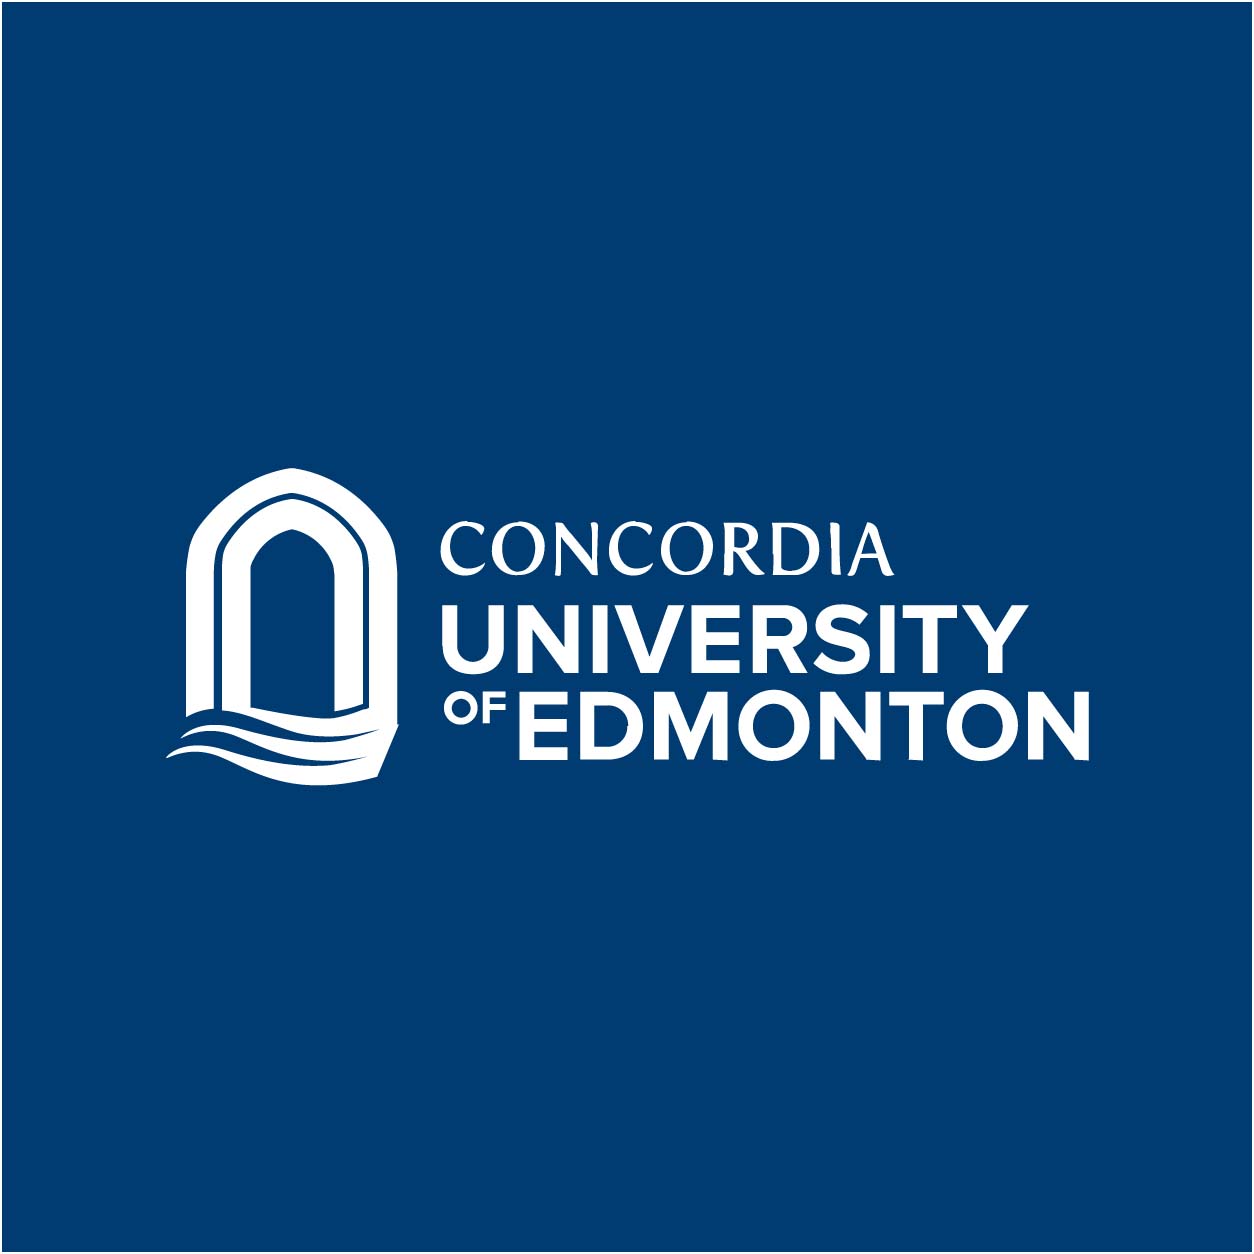 Concordia University of Edmonton logo